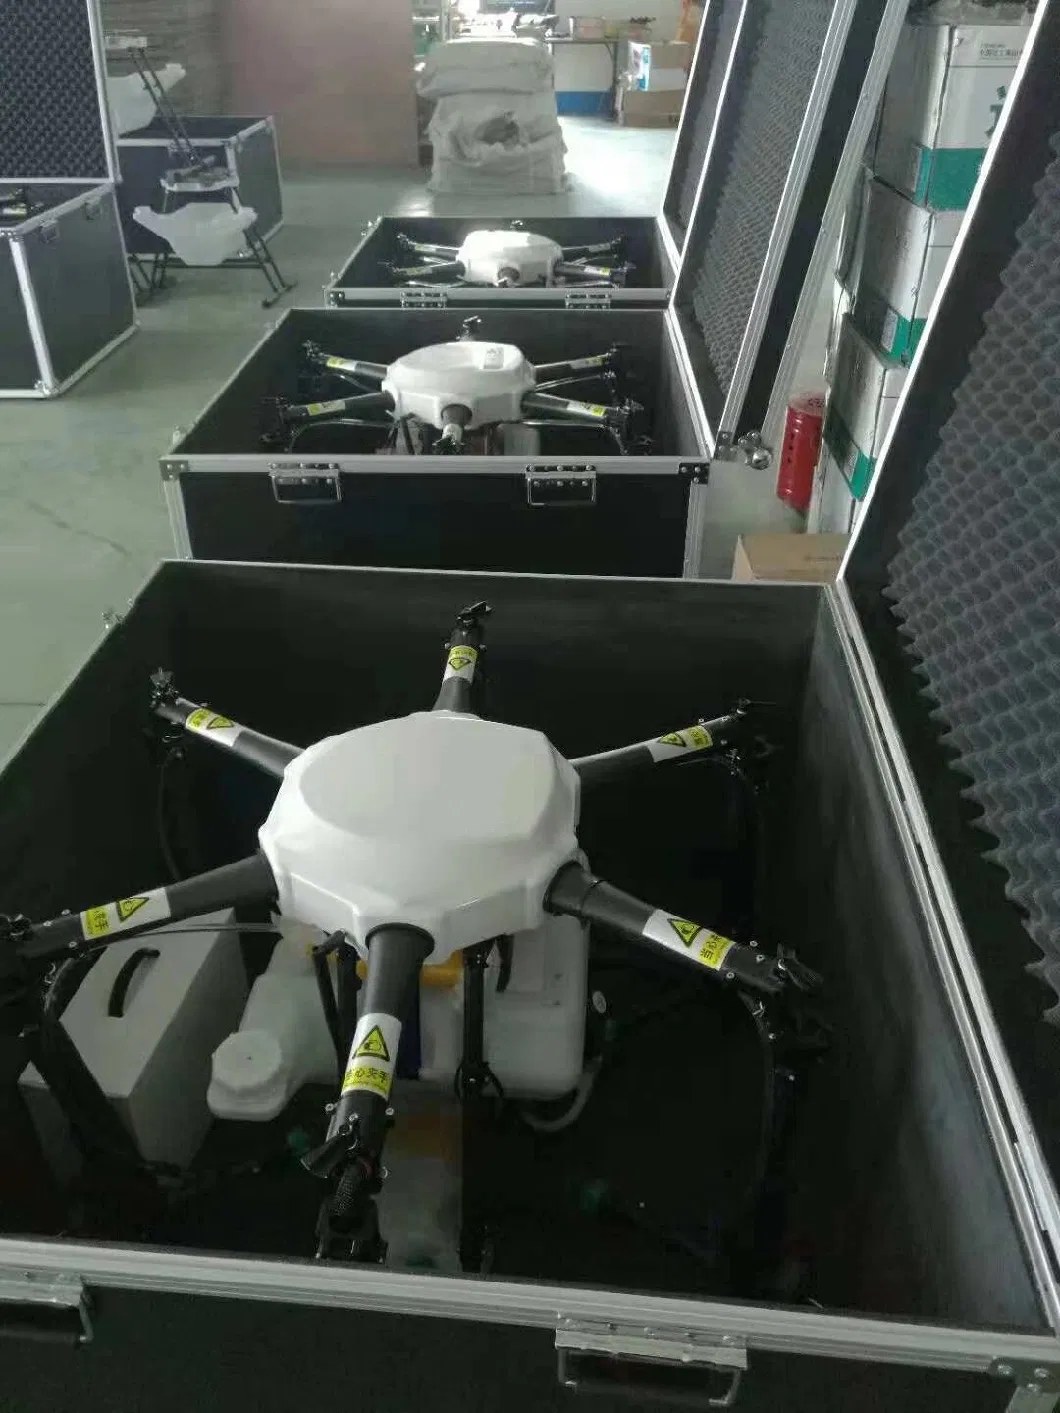 Skydroid H12 2.4GHz 12CH Remote Control Receiver / Mini Camera / Digital Map Transmission for Agricultural Farm Spraying Drone